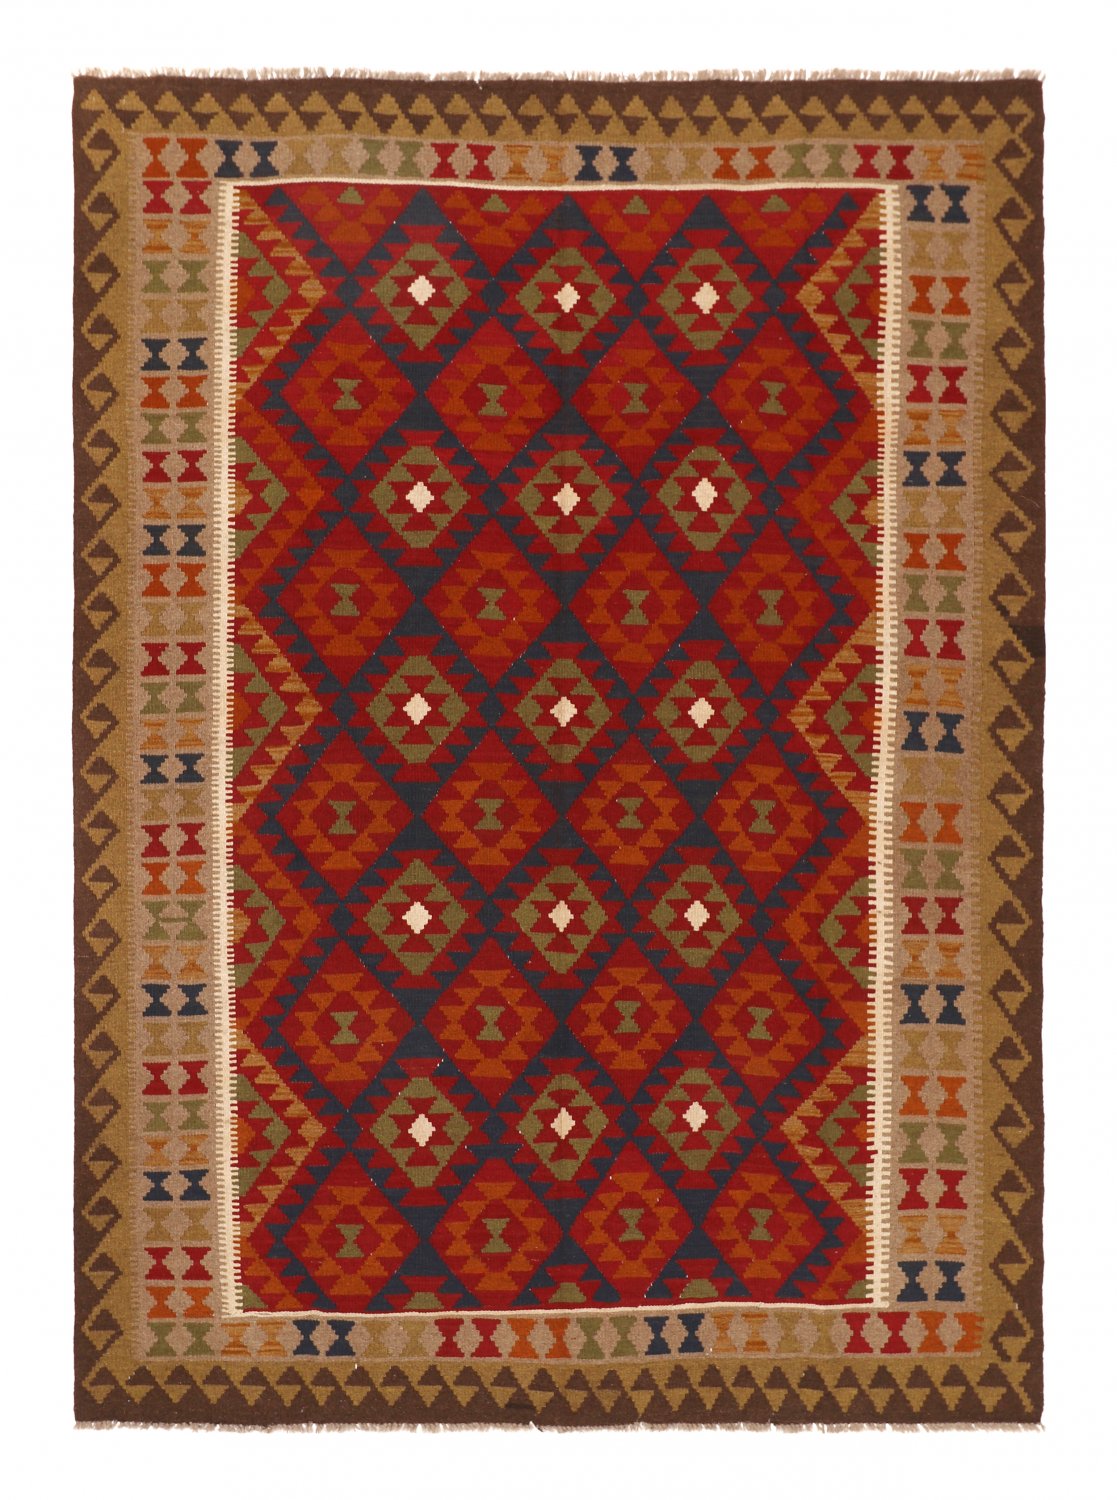 Kilim rug Afghan 299 x 213 cm